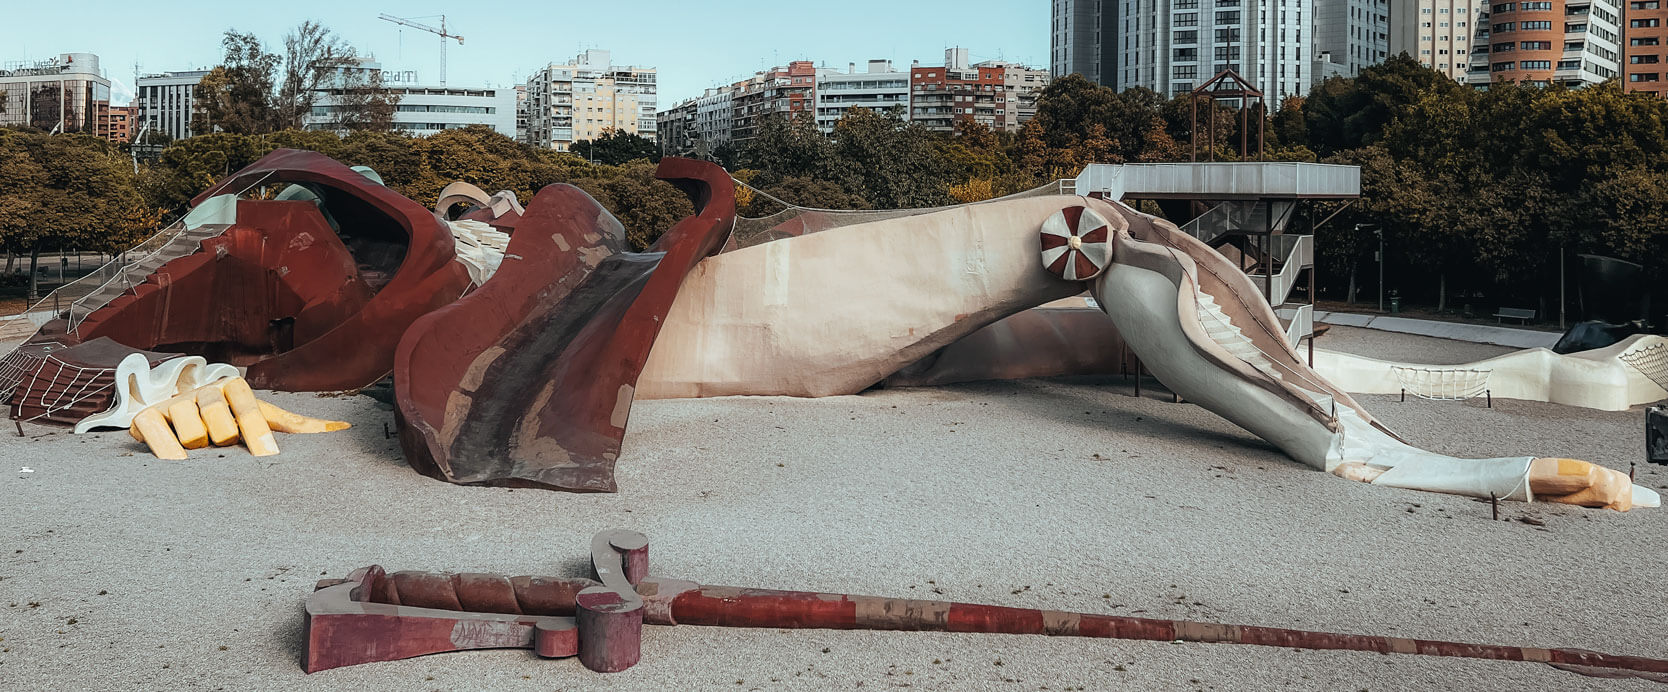 Parque Infantil Gigante Gulliver de Valencia, en el Parc del Turia